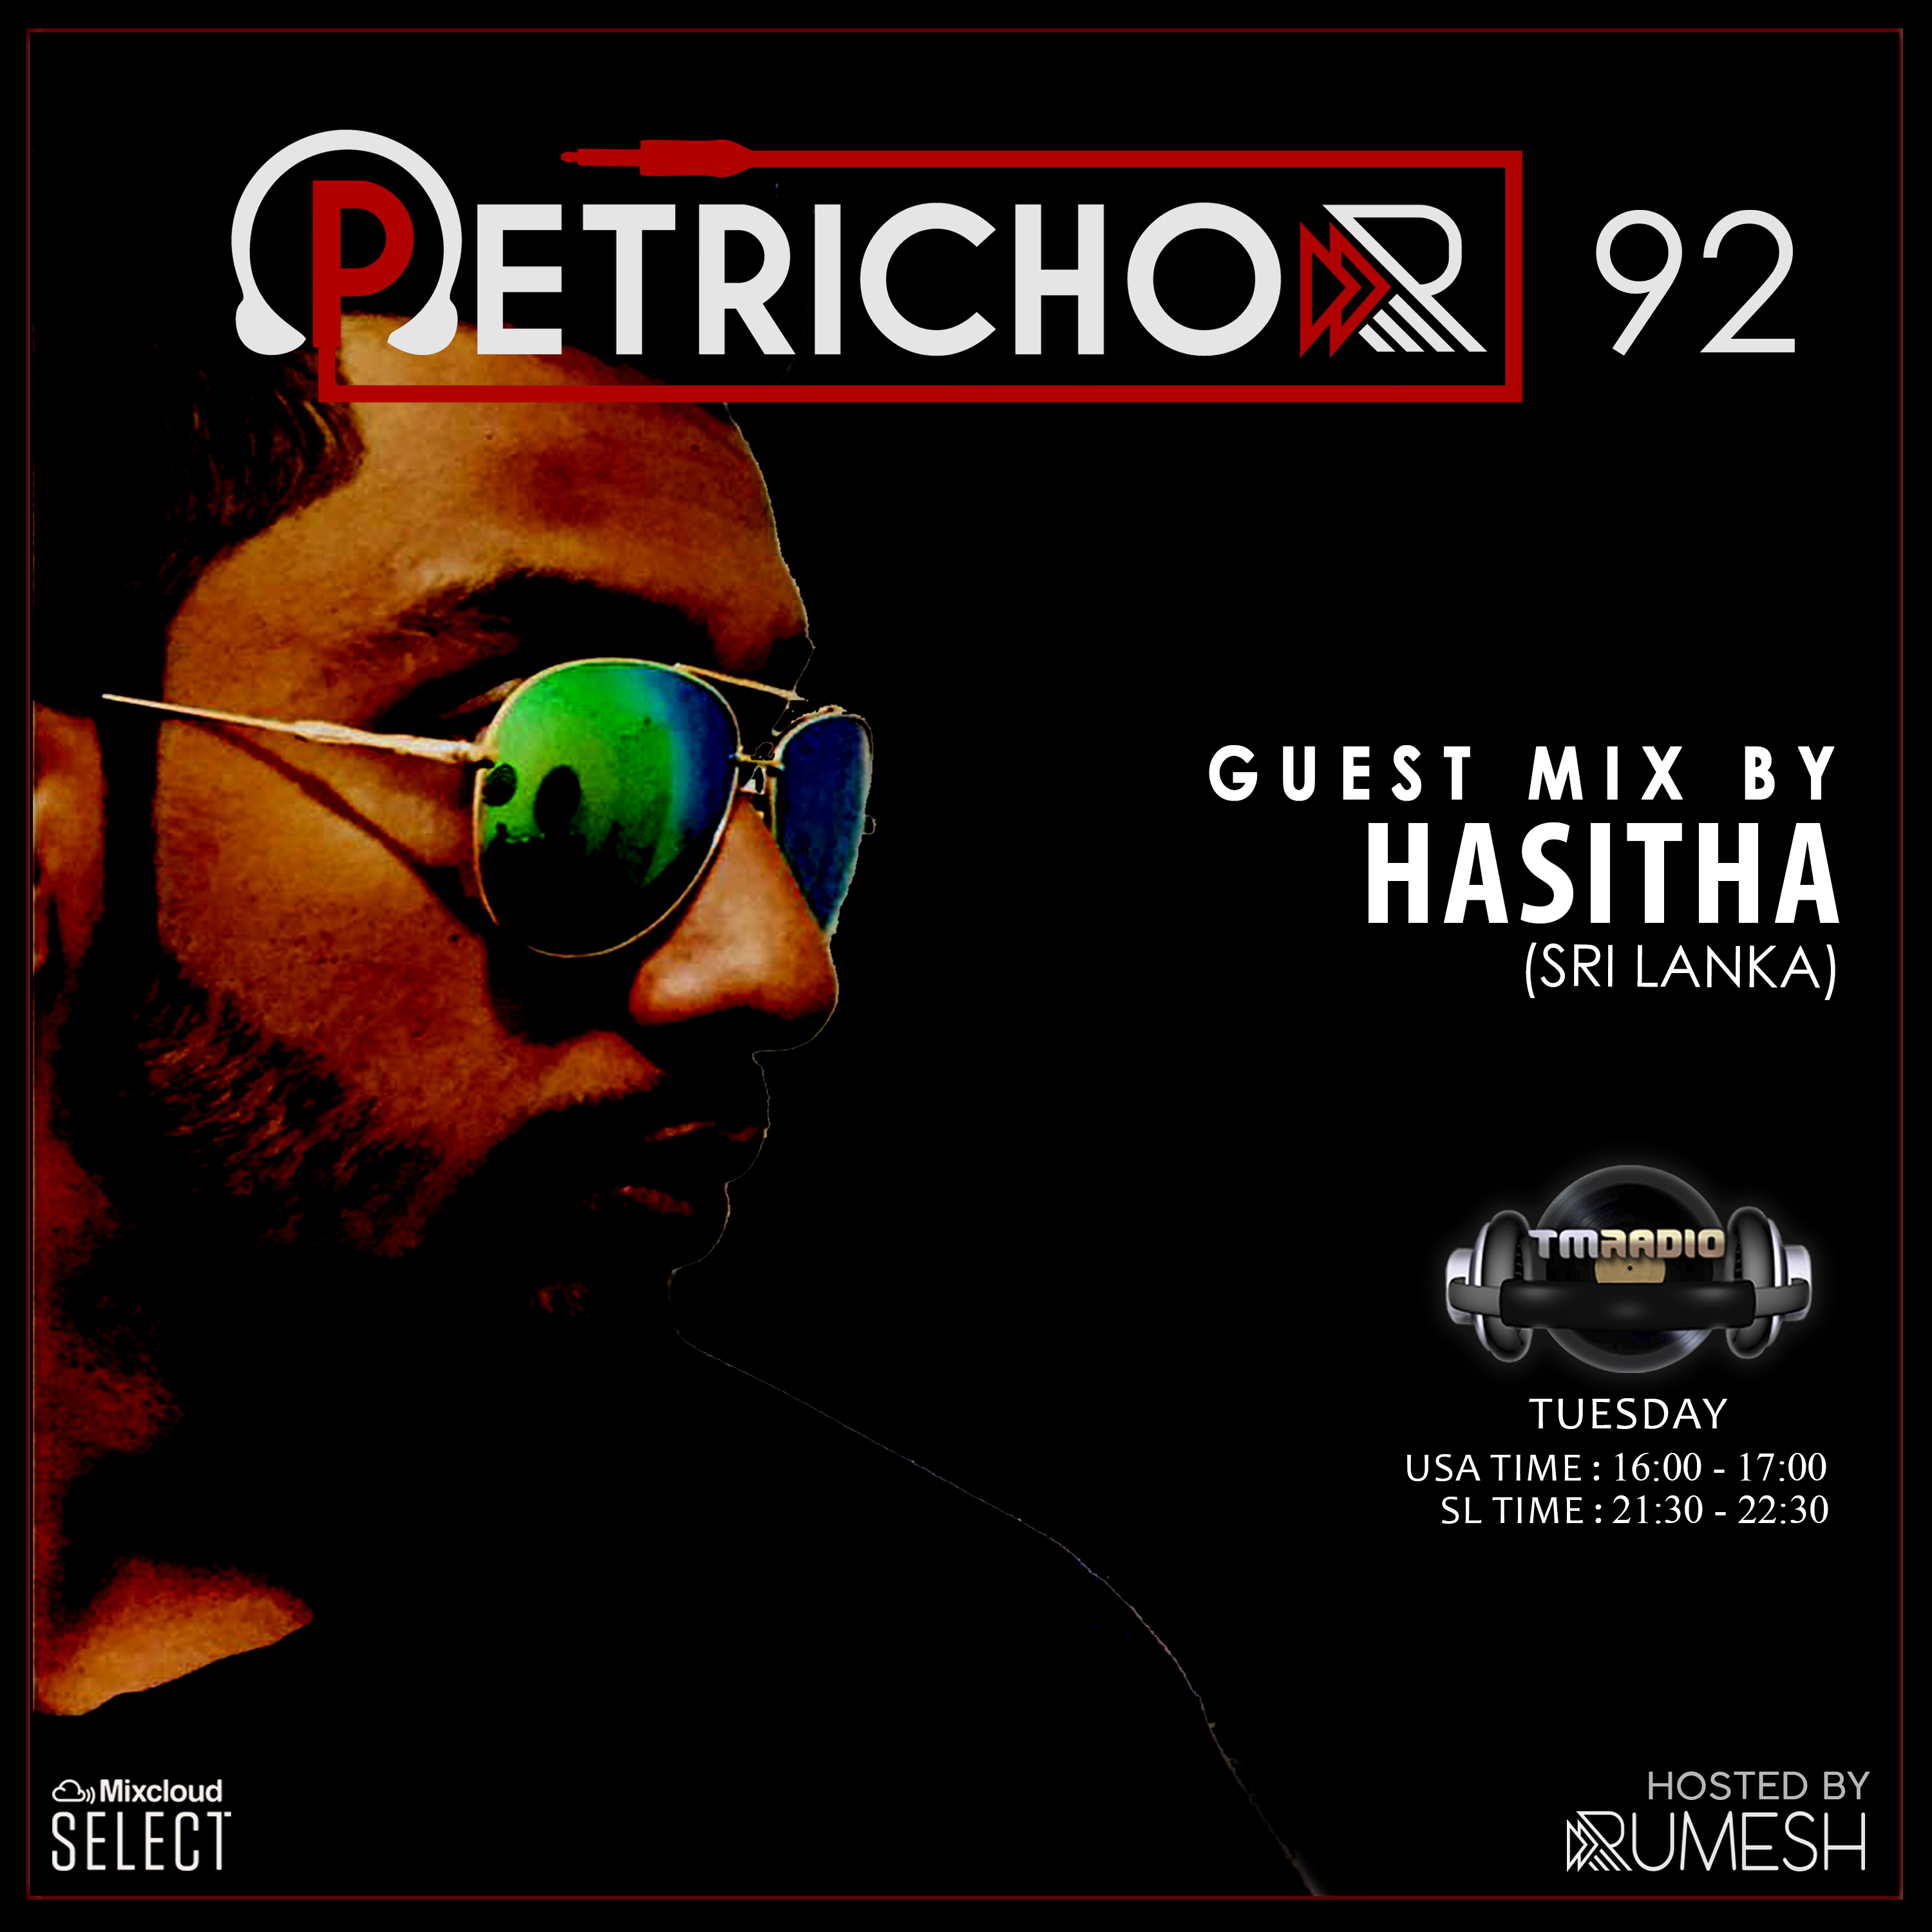 Petrichor :: Petrichor 92 guest mix by Hasitha (Sri Lanka) (aired on November 3rd, 2020) banner logo